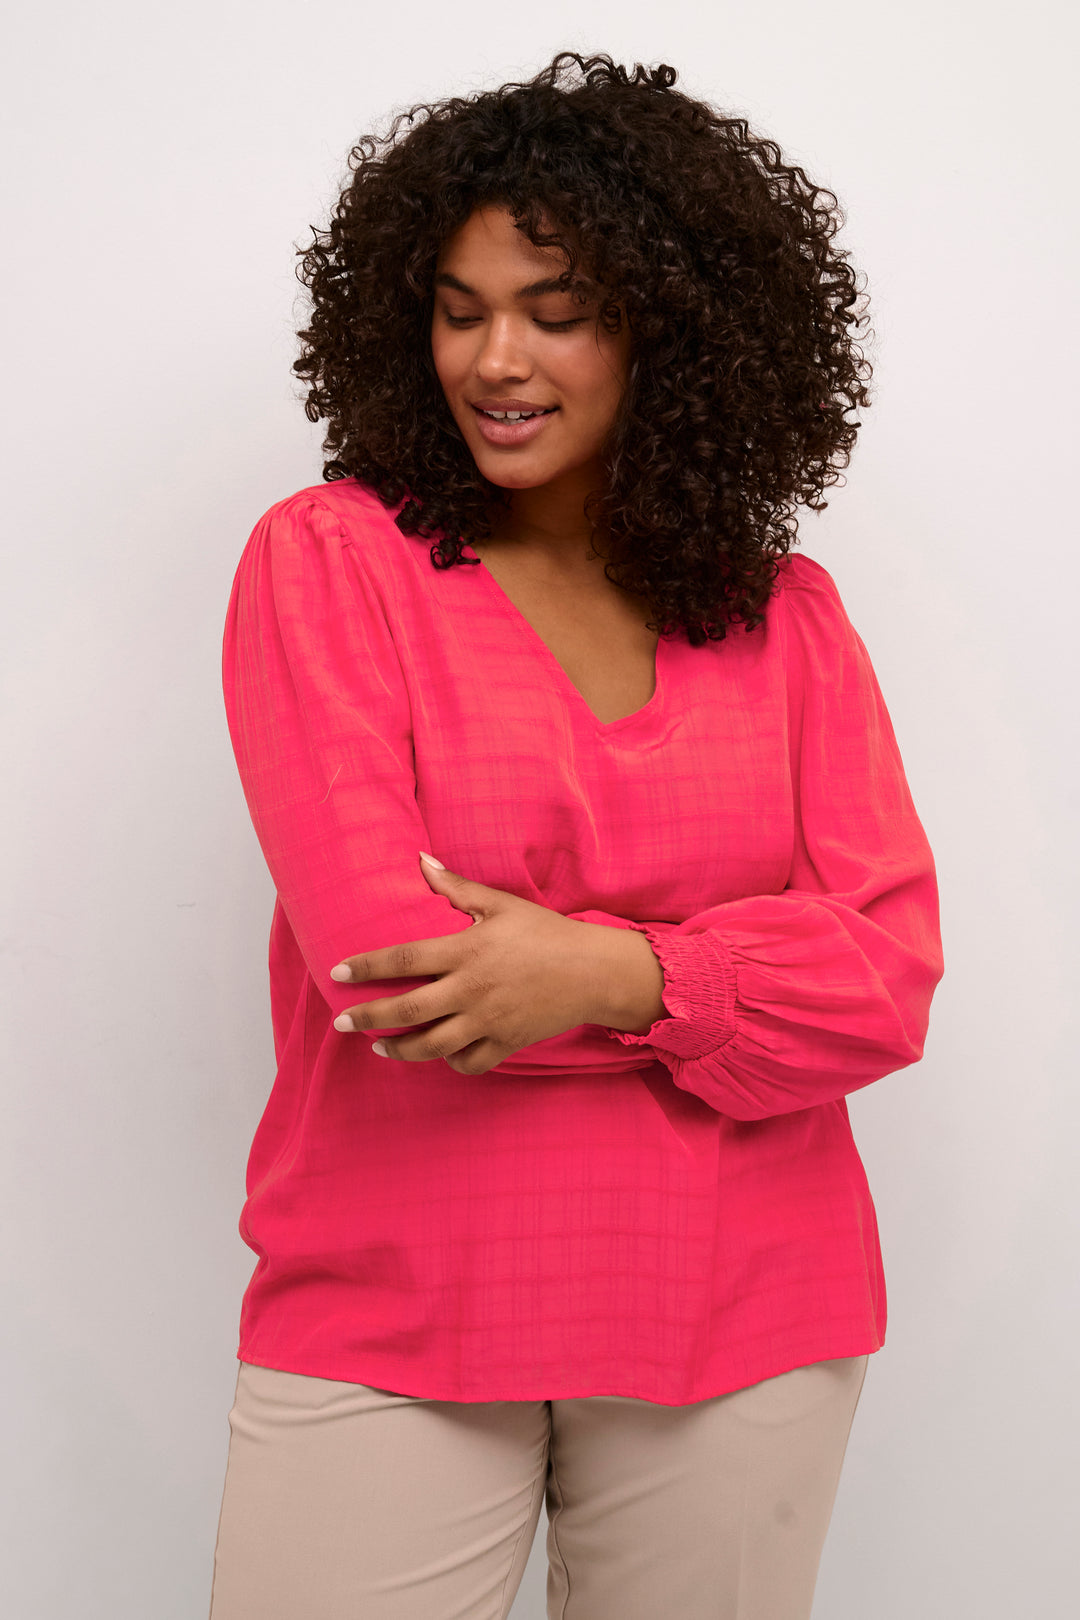 tijdloze hot pink blouse - kaffe curve - - grote maten - dameskleding - kledingwinkel - herent - leuven